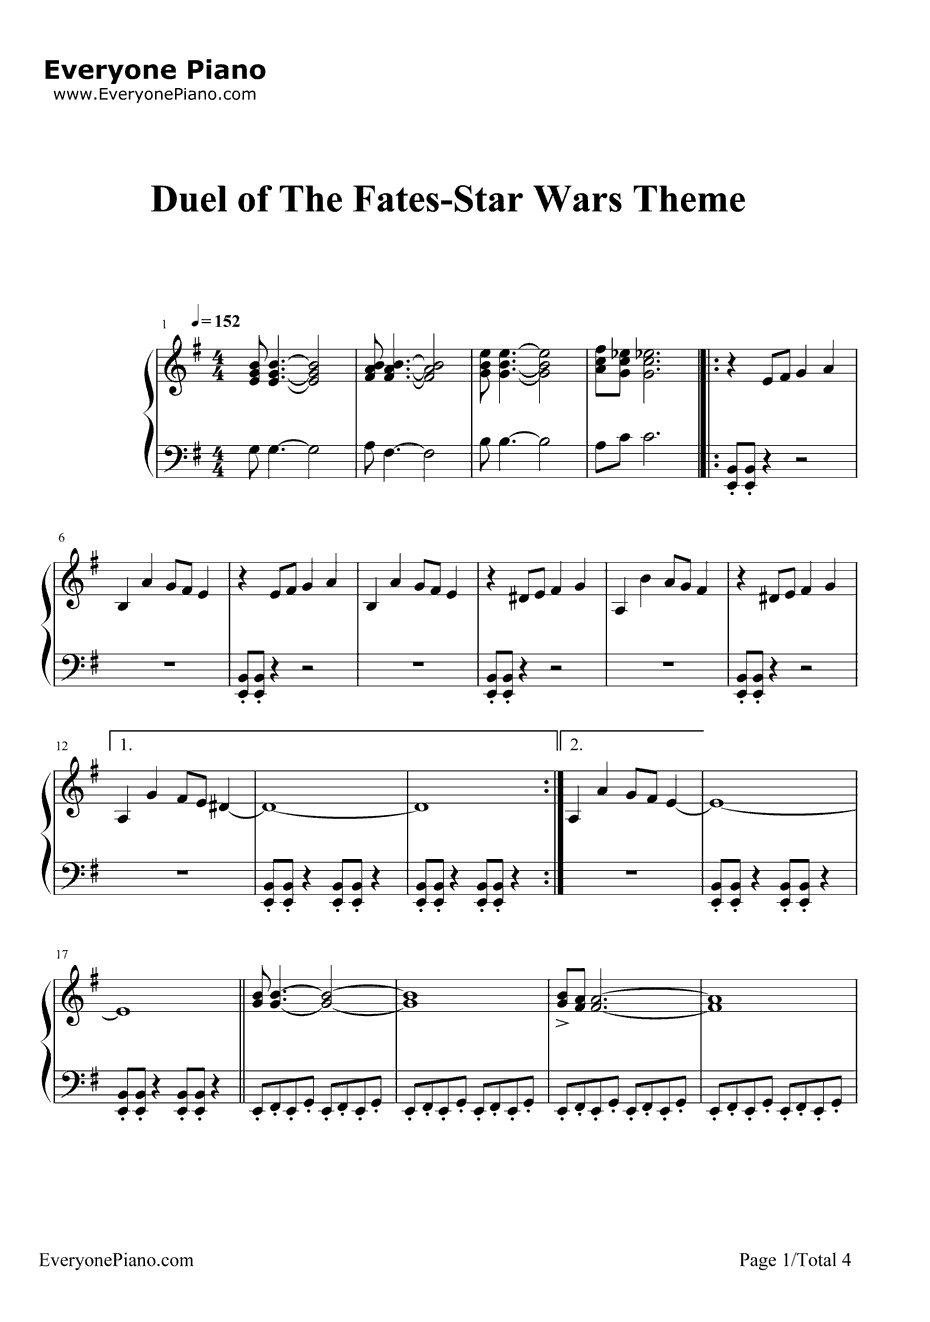 DuelofTheFates钢琴谱-JohnWilliams-星球大战主题曲1